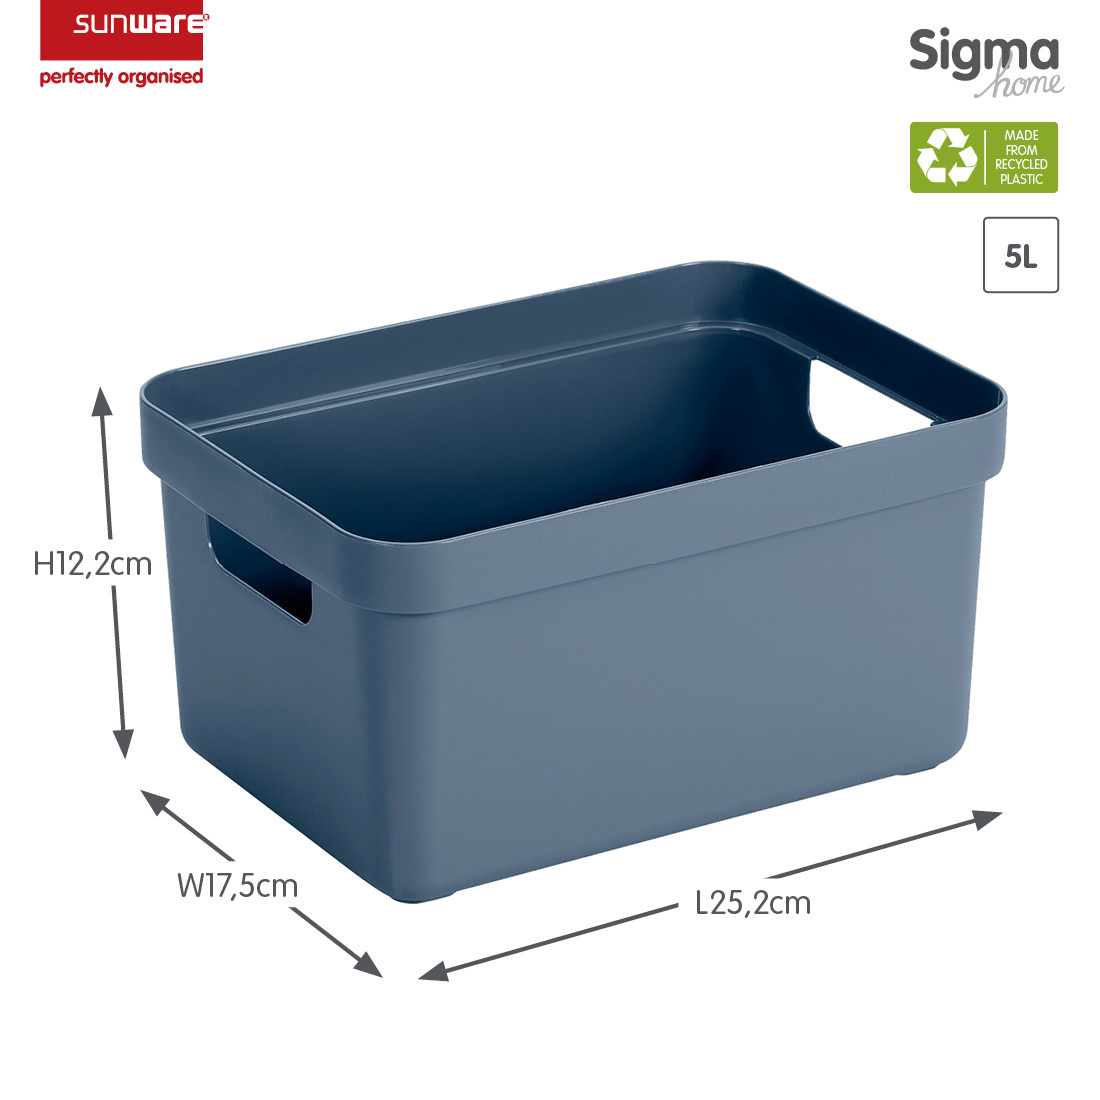 Sigma home Aufbewahrungsbox 5L dunkel blau